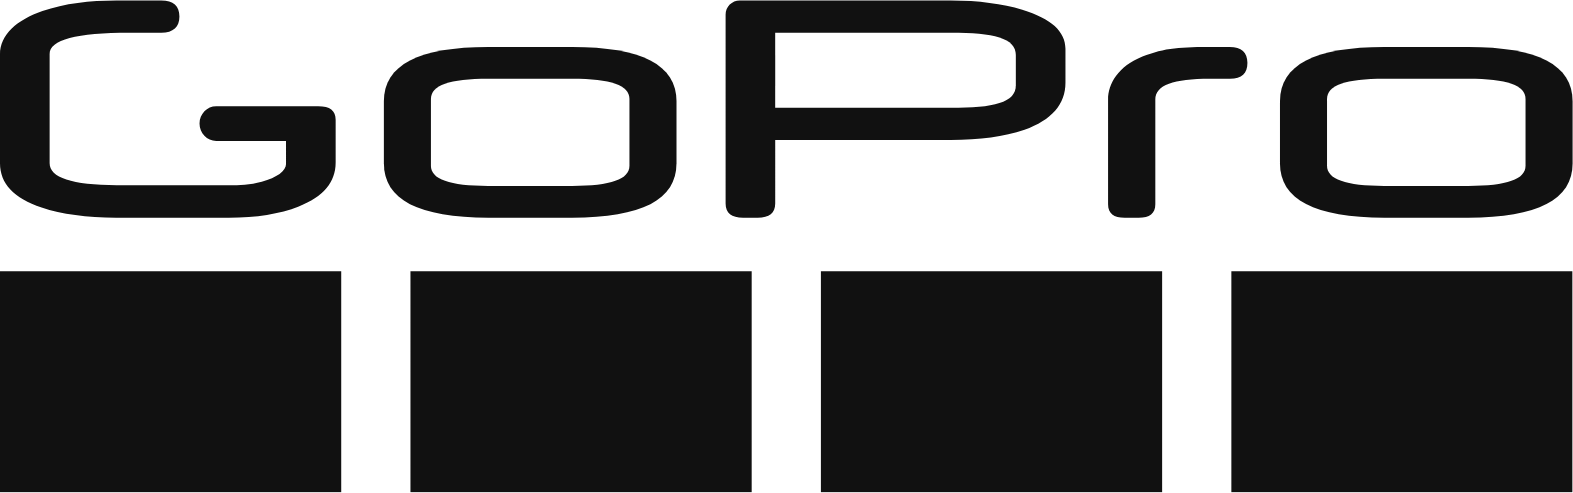 GoPro logo (transparent PNG)